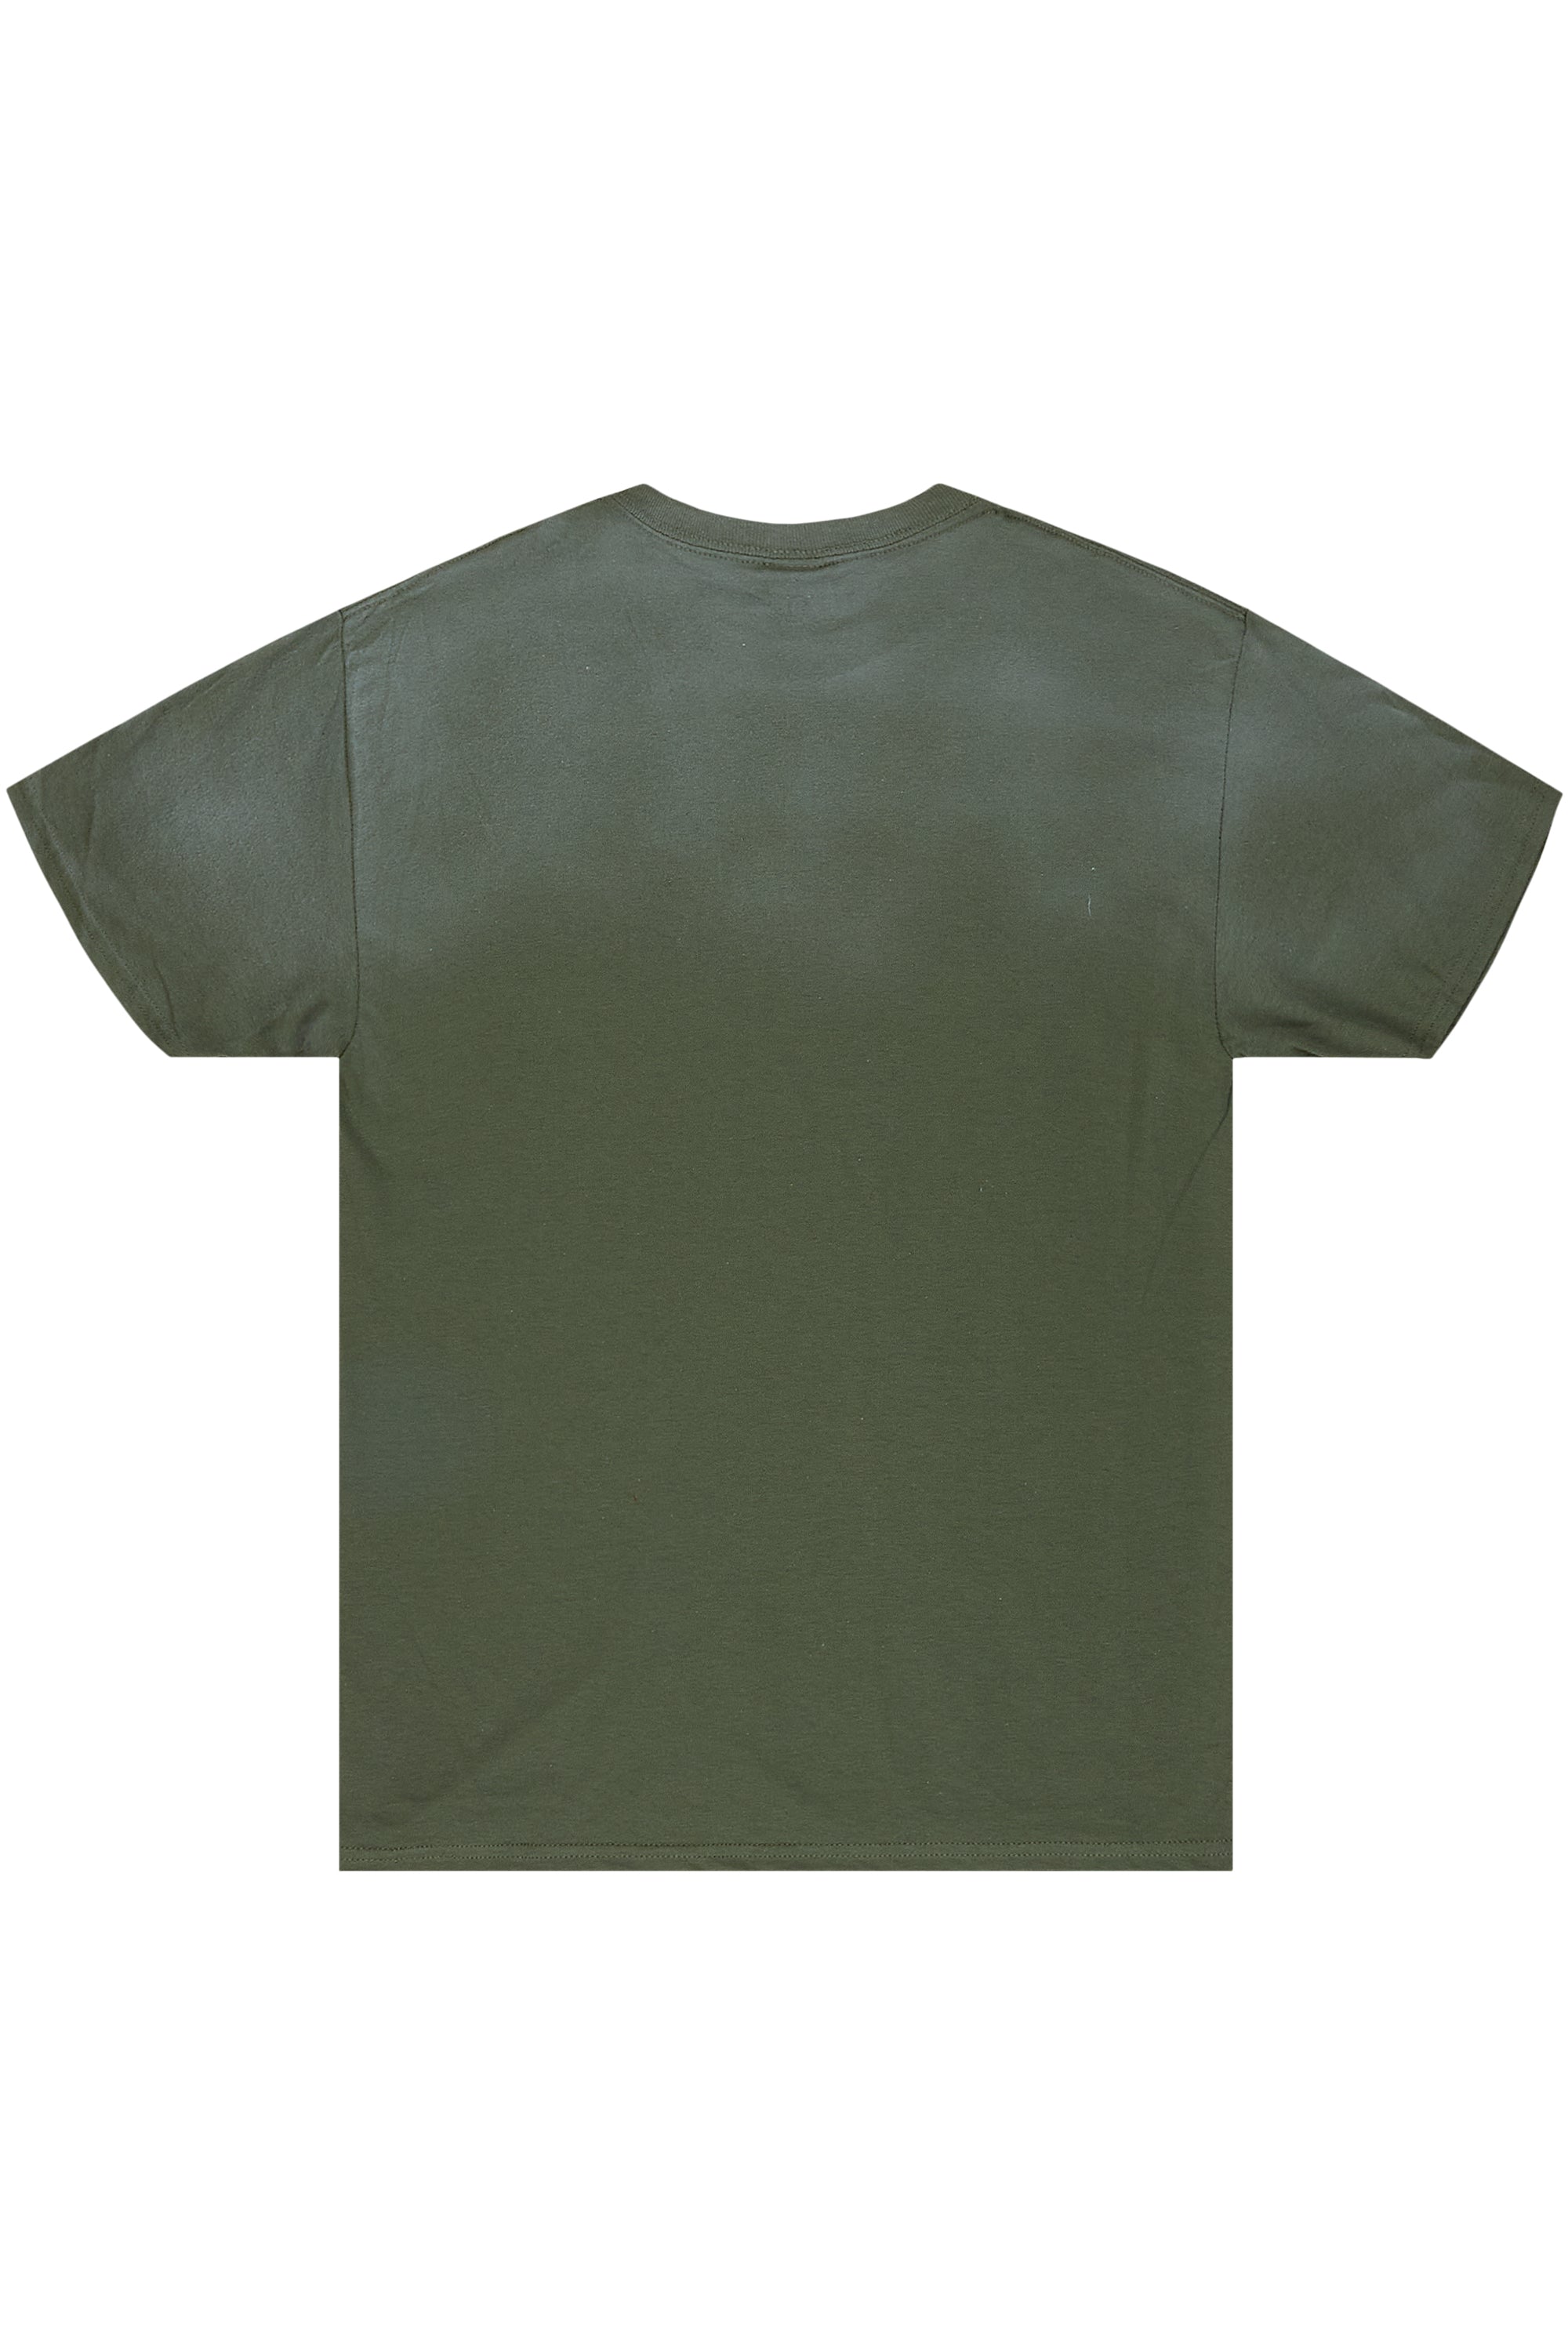 Palmer Green Graphic T-Shirt